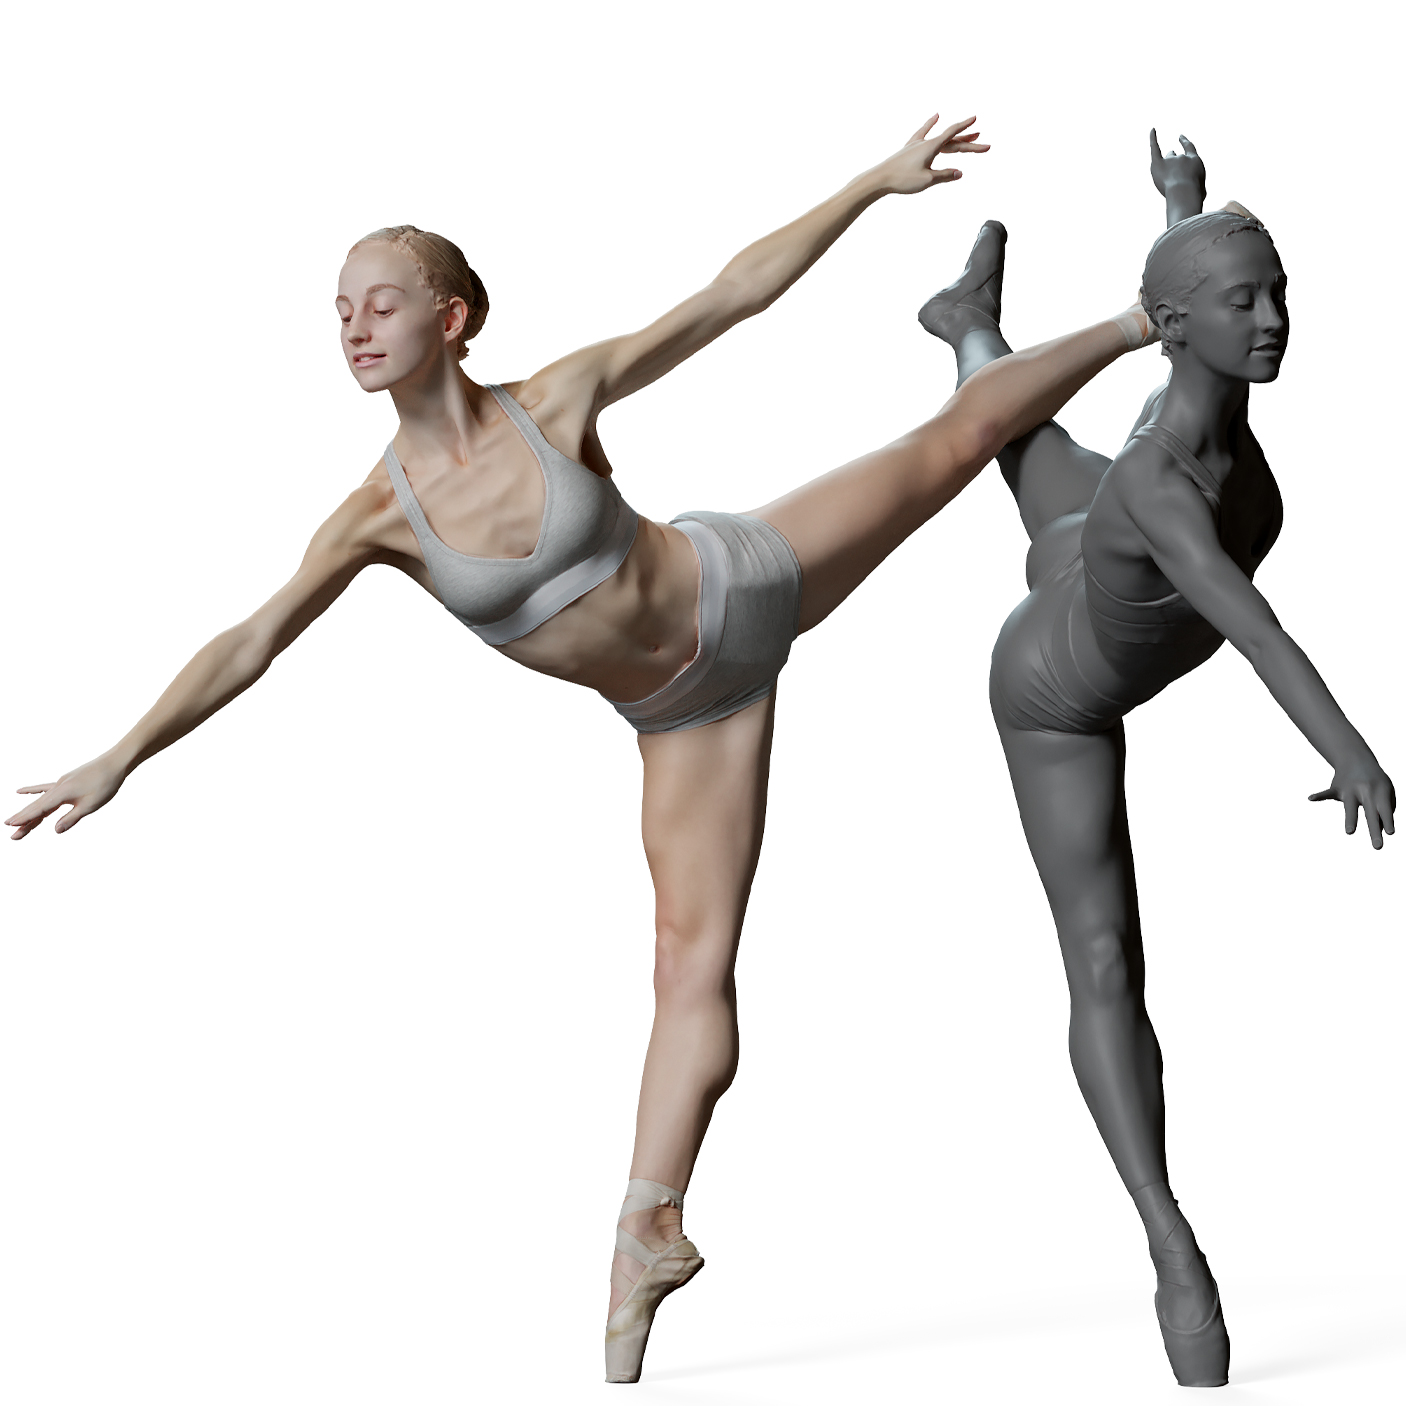 ballet dance poses